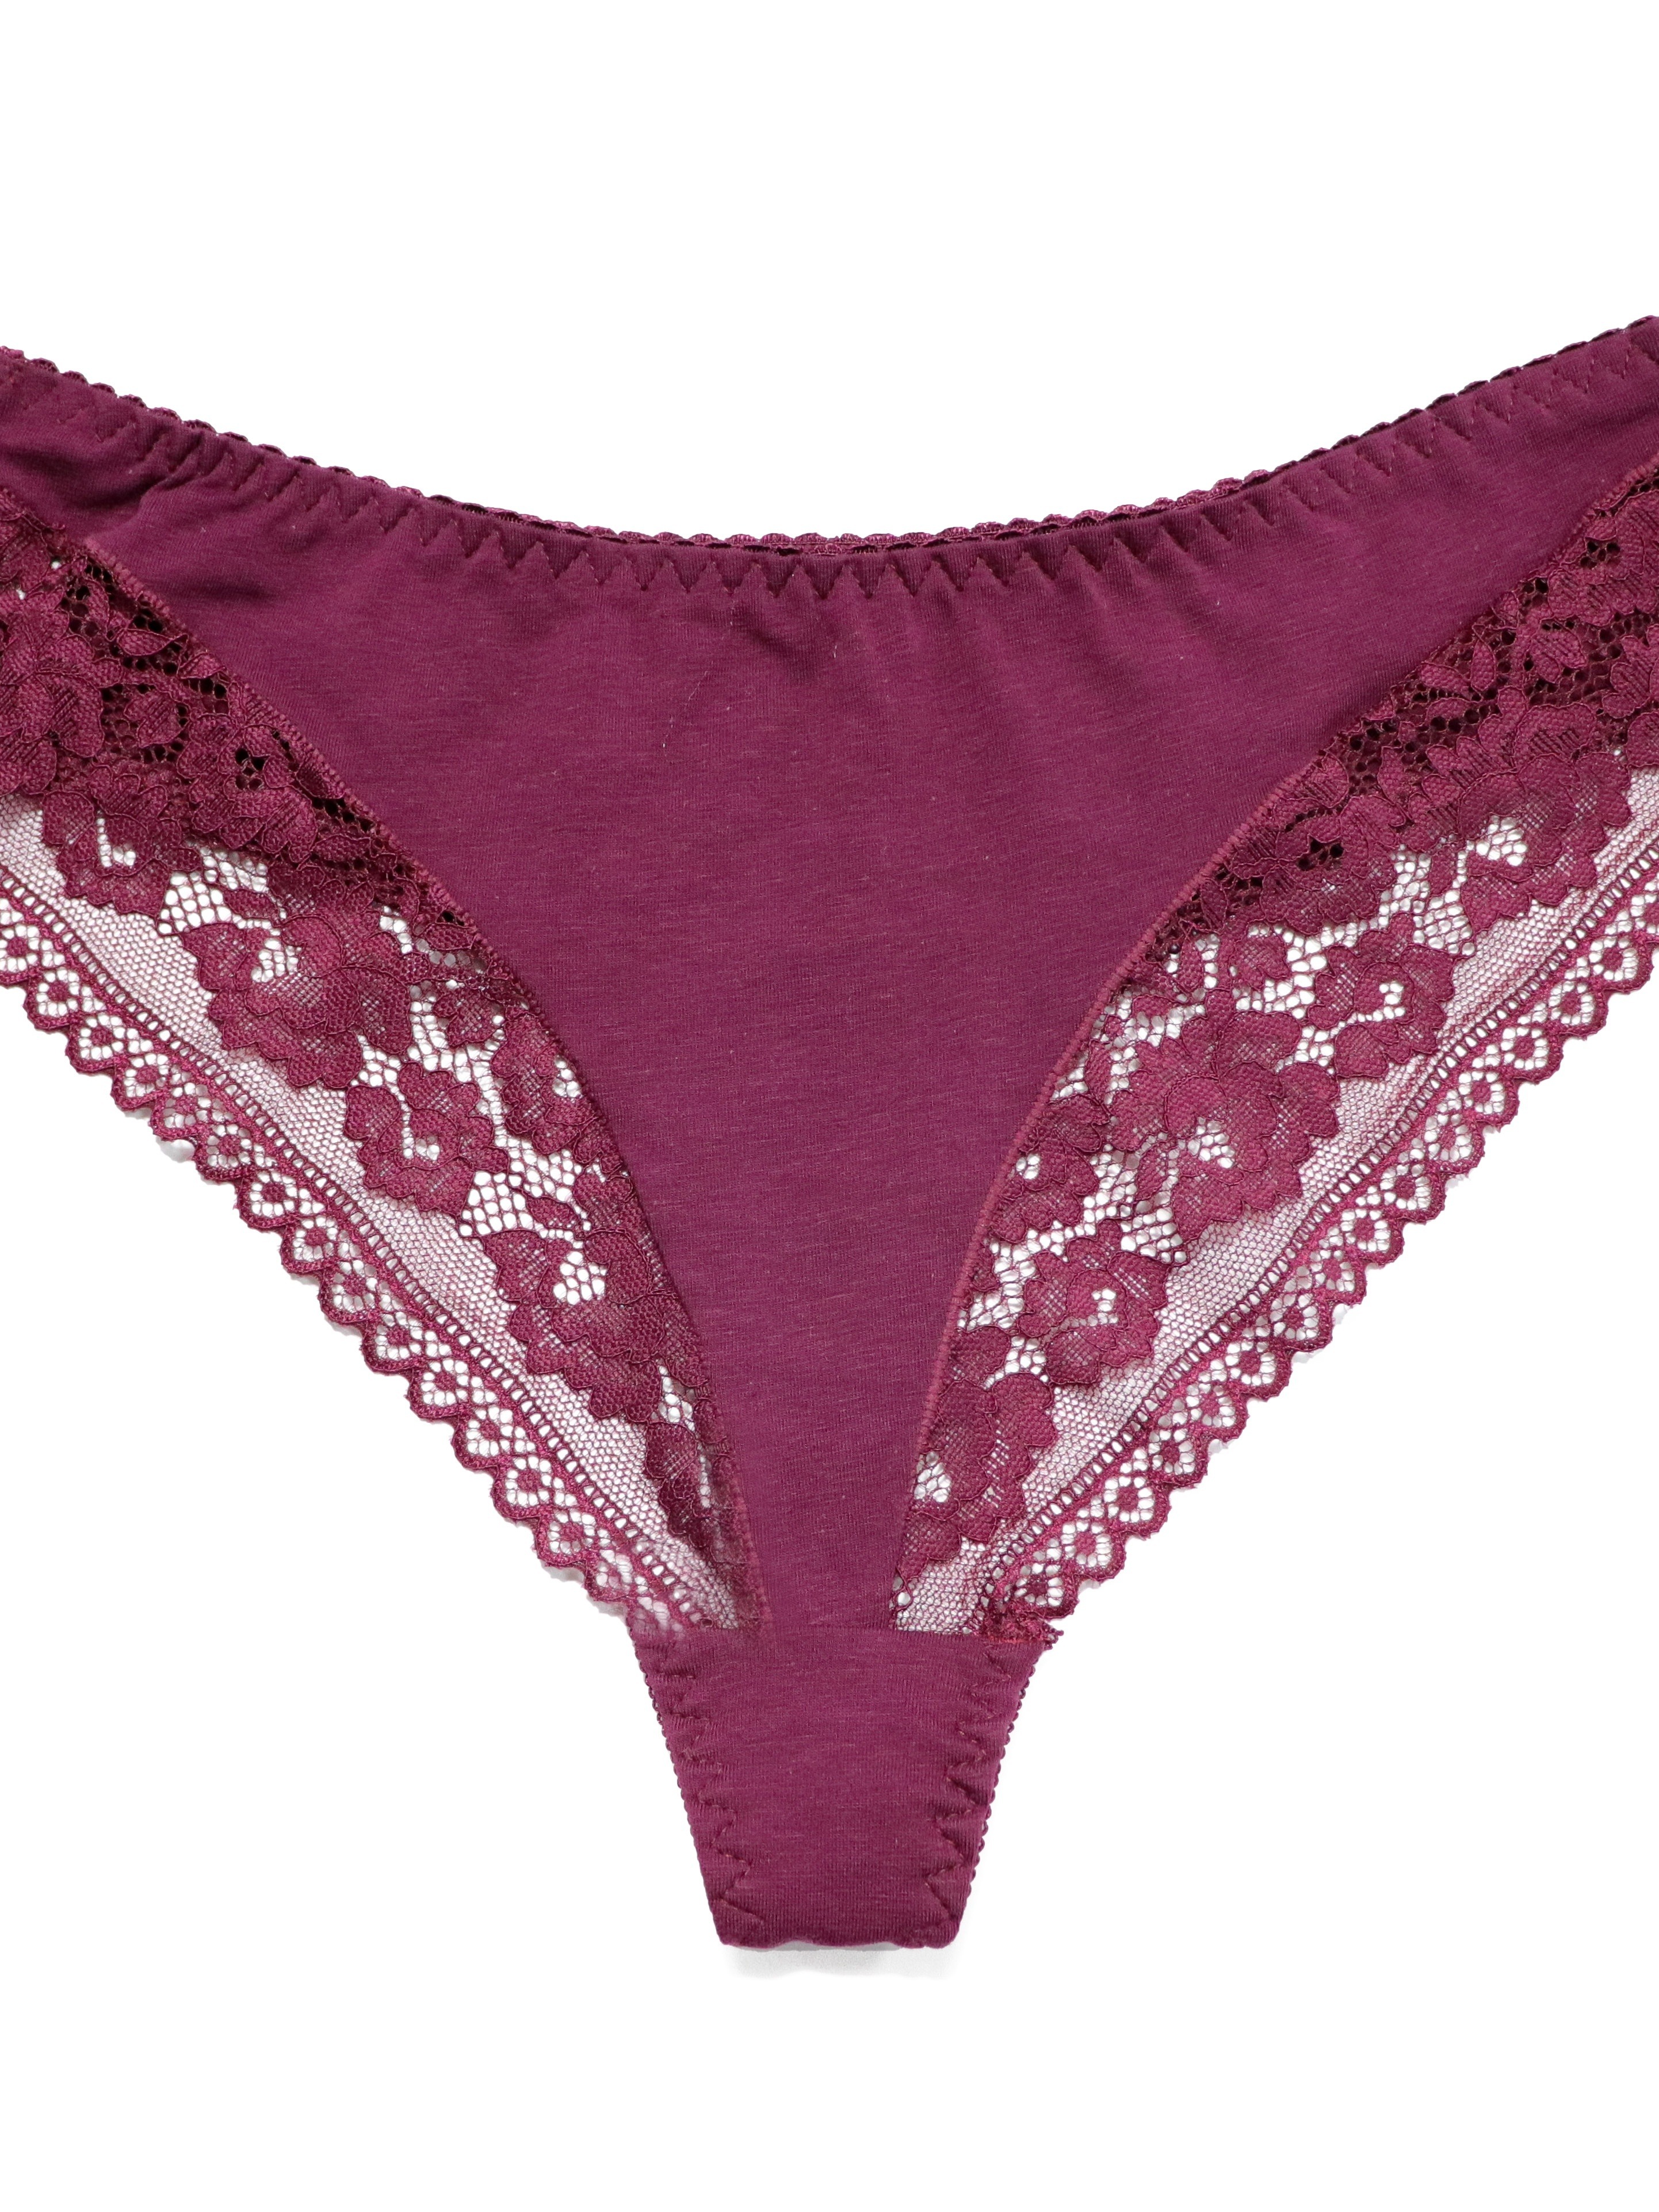 Elegant Moments Burgundy Velvet Lace Bra & High Waist Panty Set Plus Size 3X  - www.